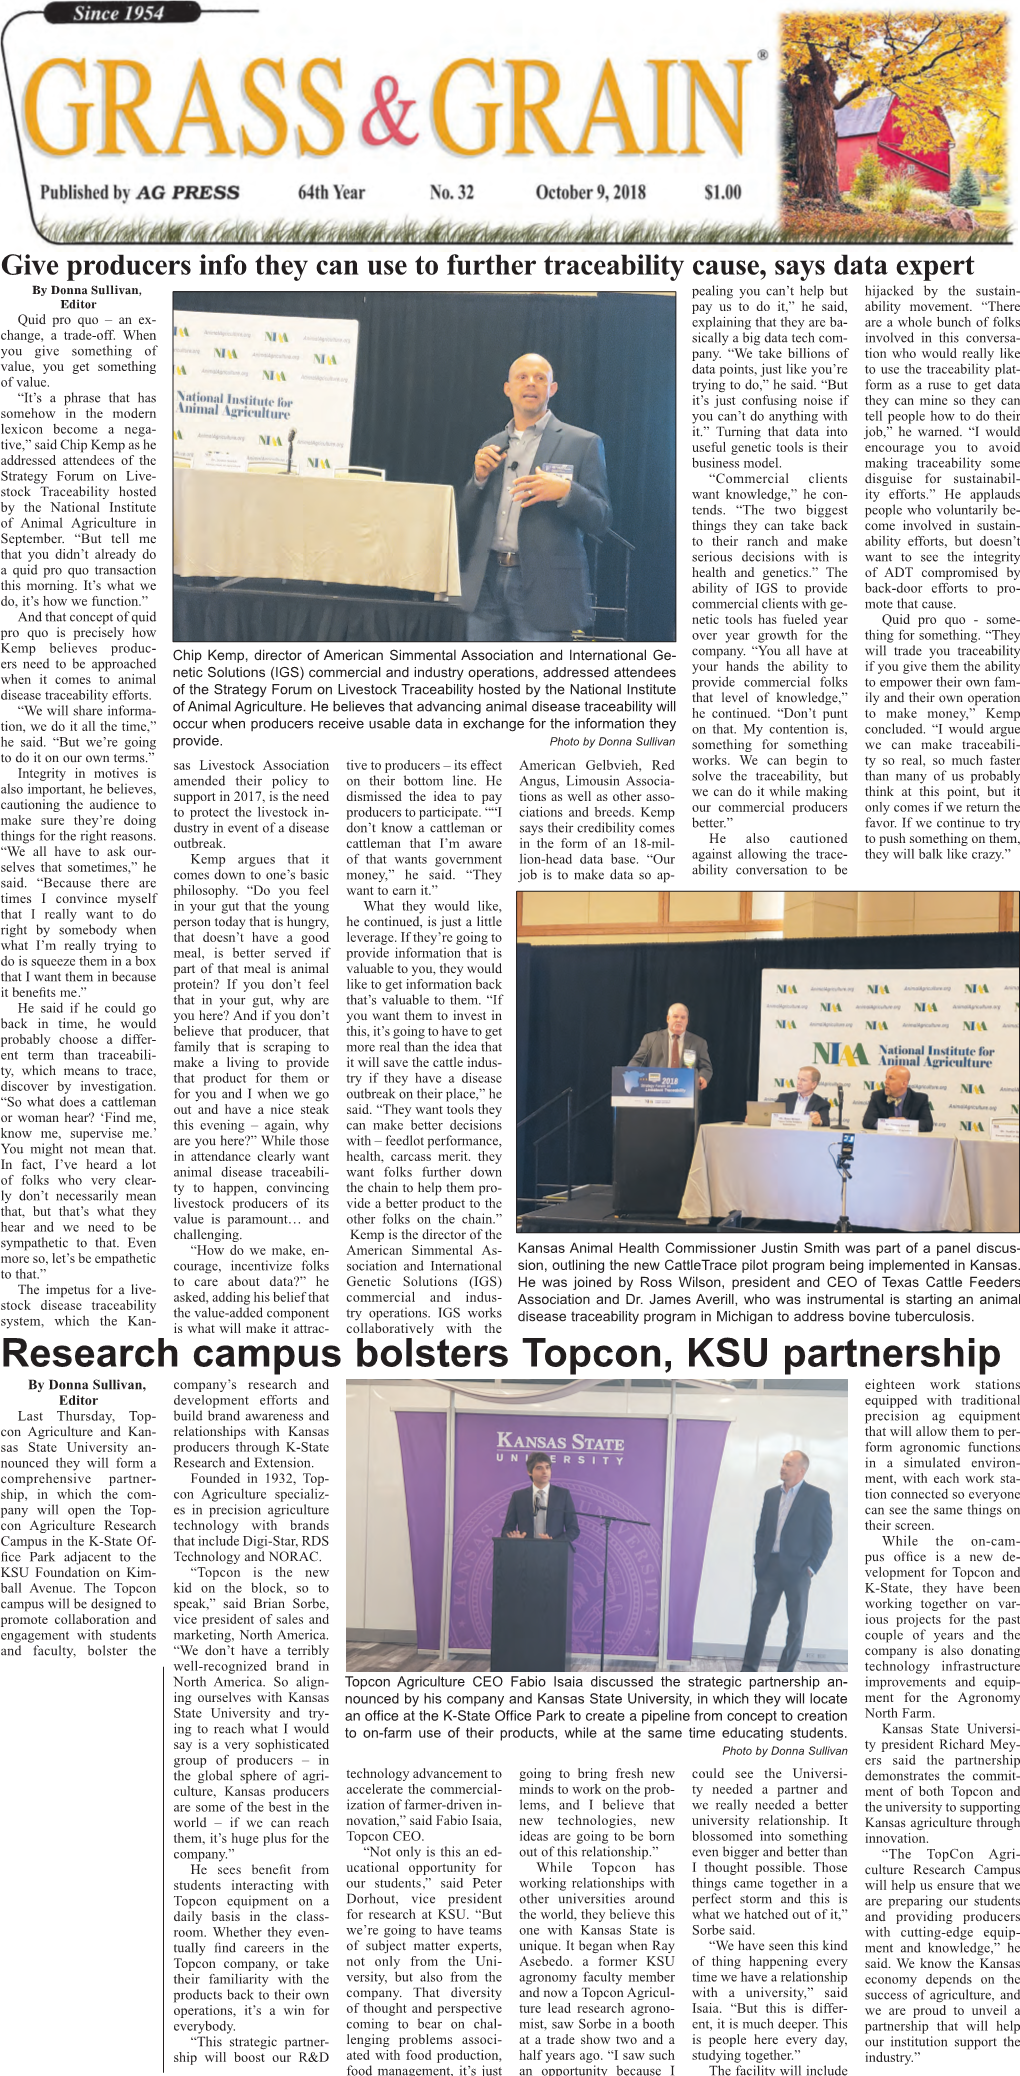 Research Campus Bolsters Topcon, KSU Partnership